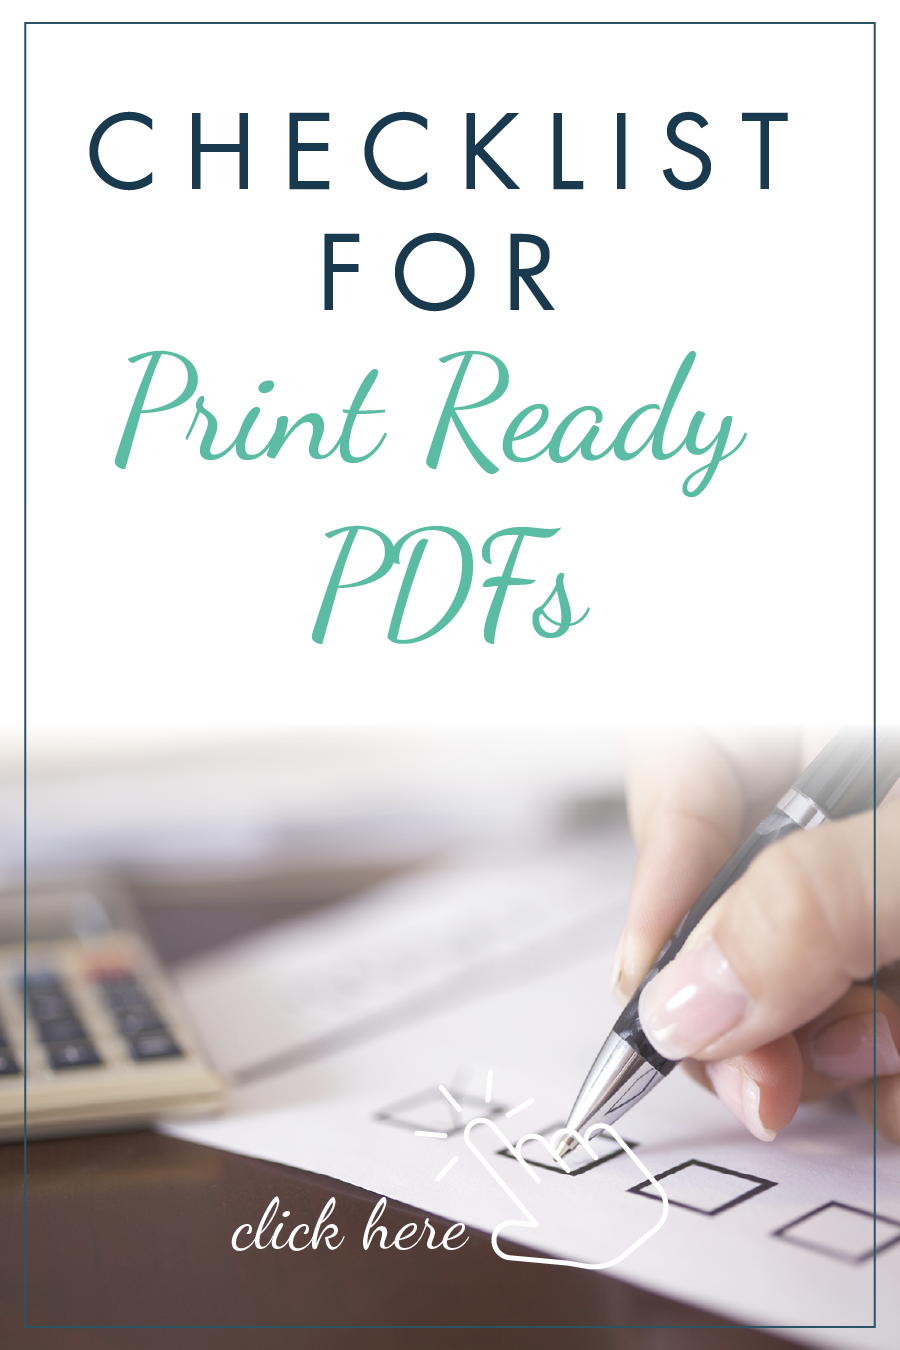 Checklist for Print Ready PDFs